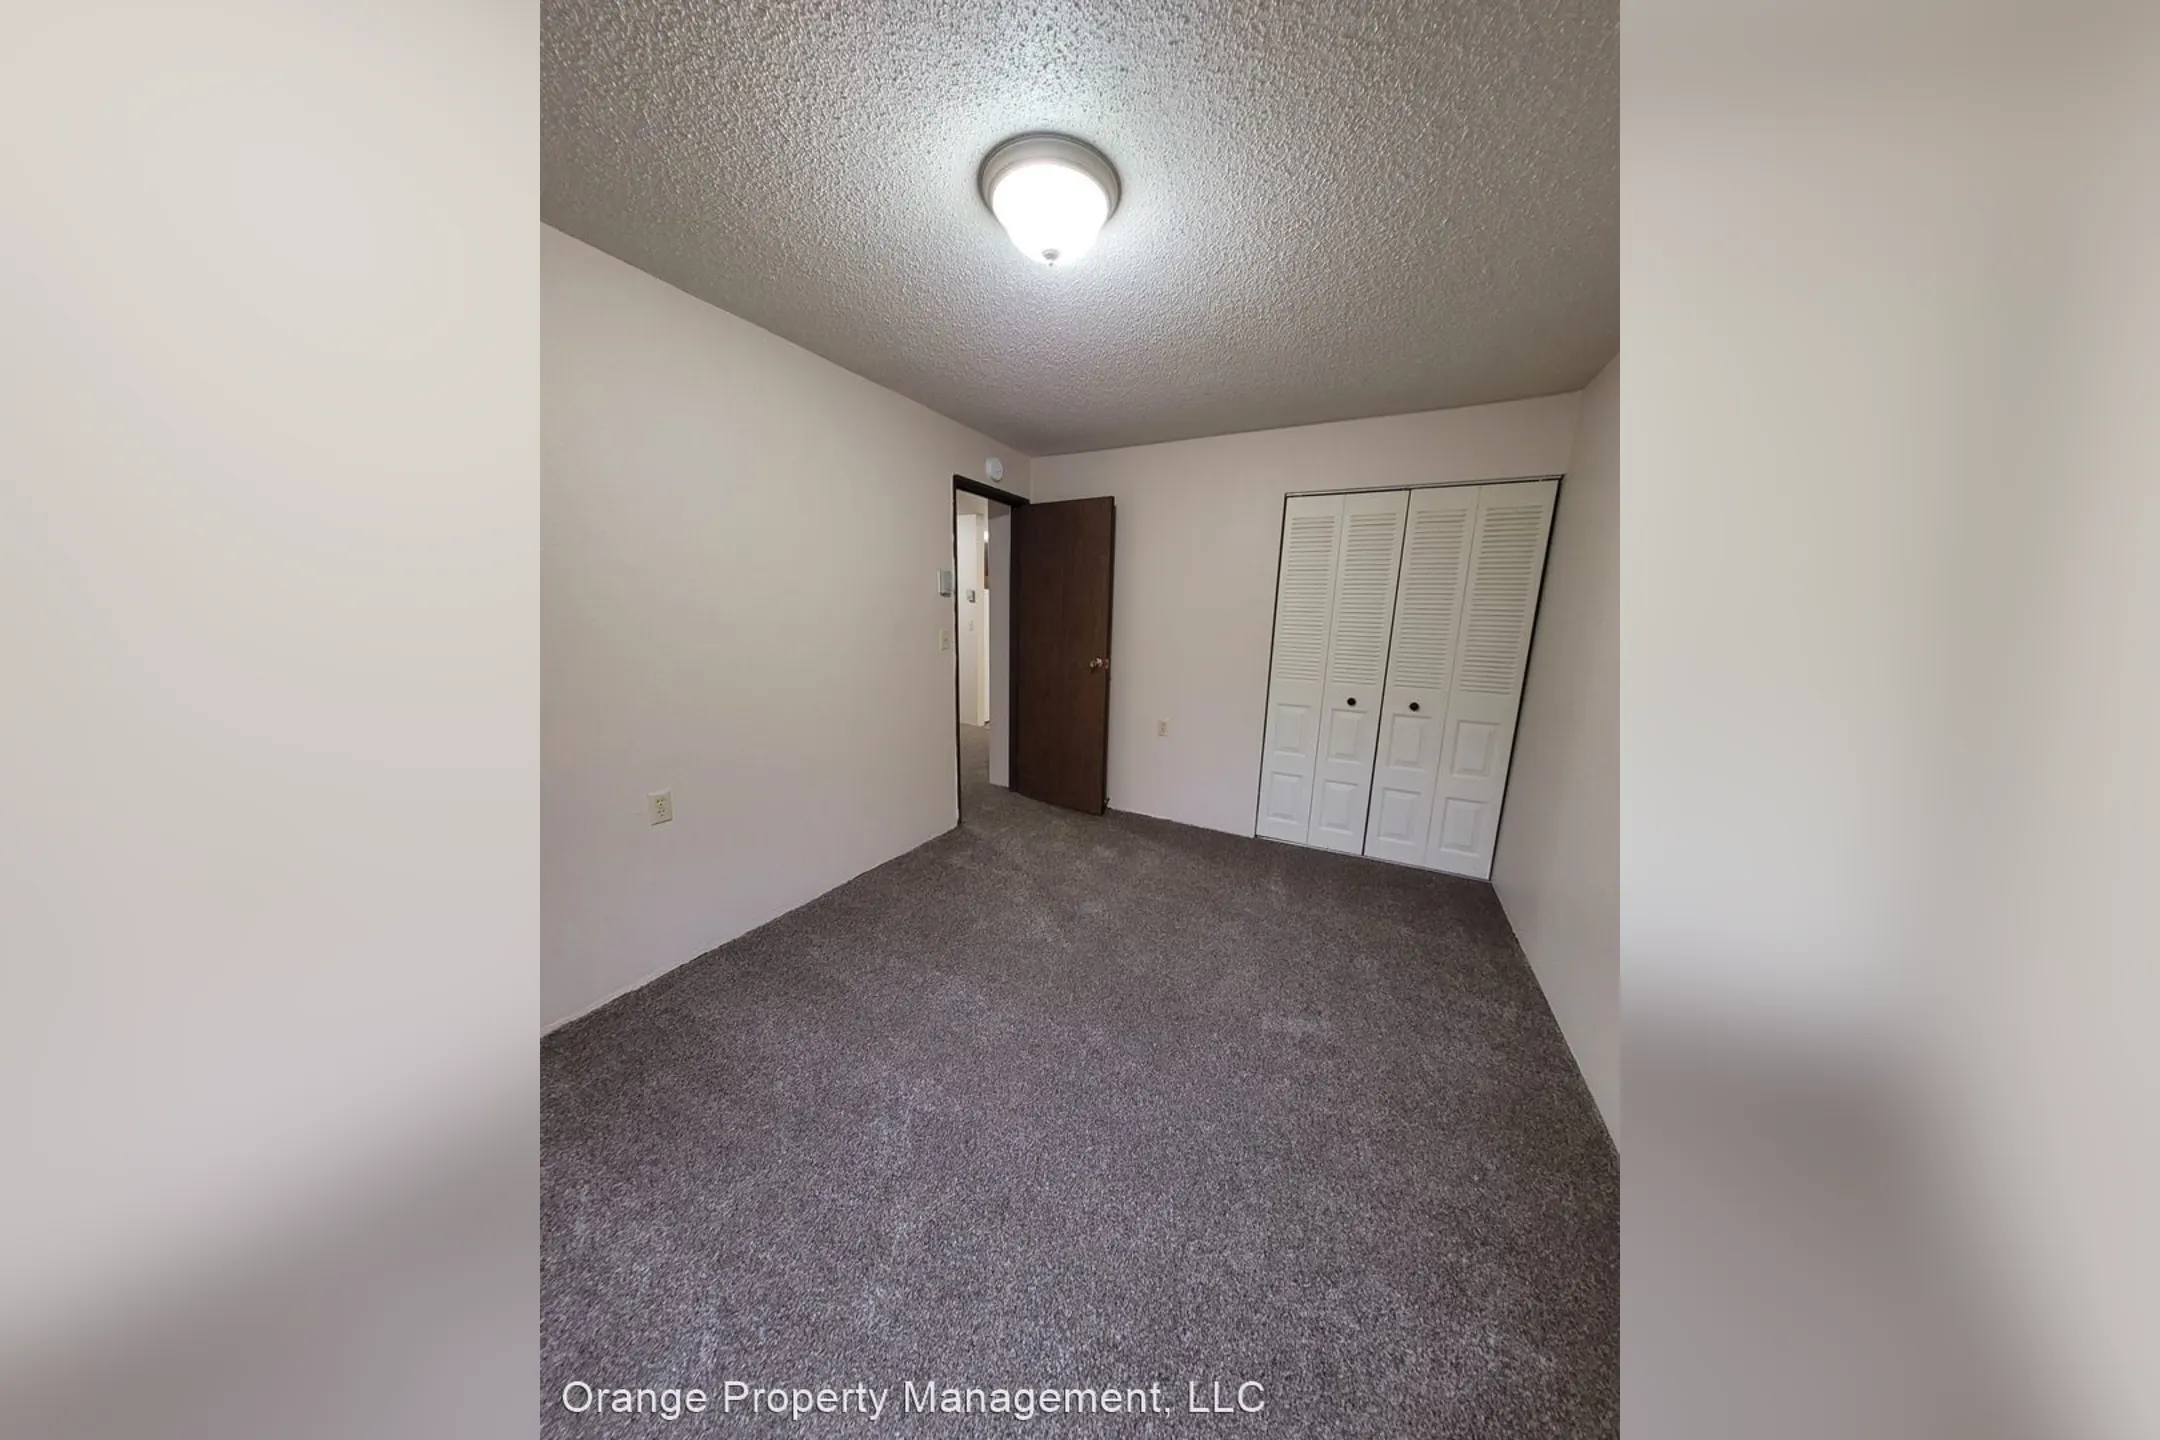 Bedroom - Frederick Apartments - Fargo, ND